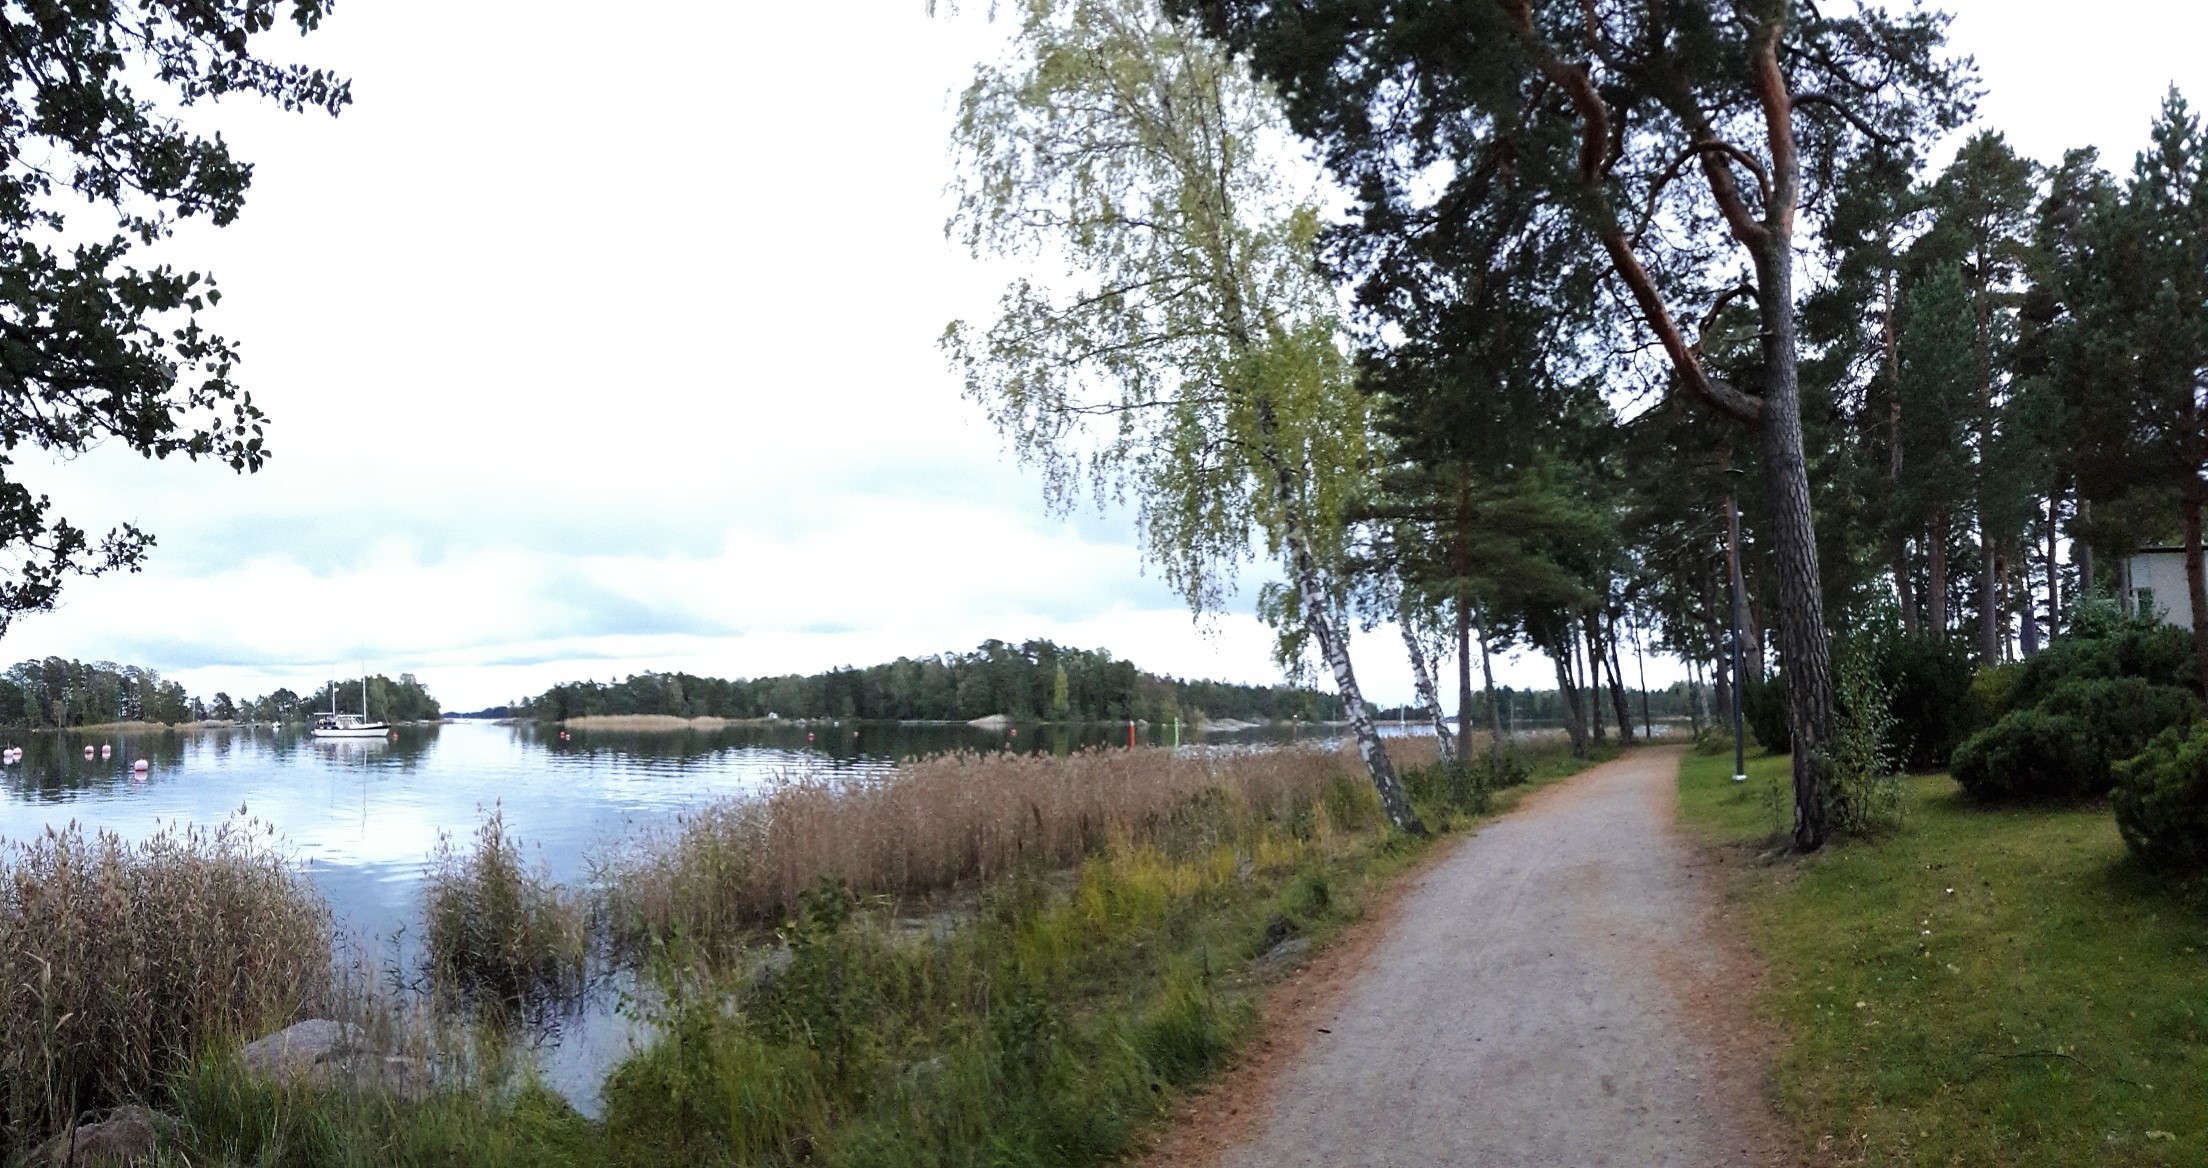 Rantaraitti seaside promenade and waterfront walkway in Espoo, in Finland's capital area